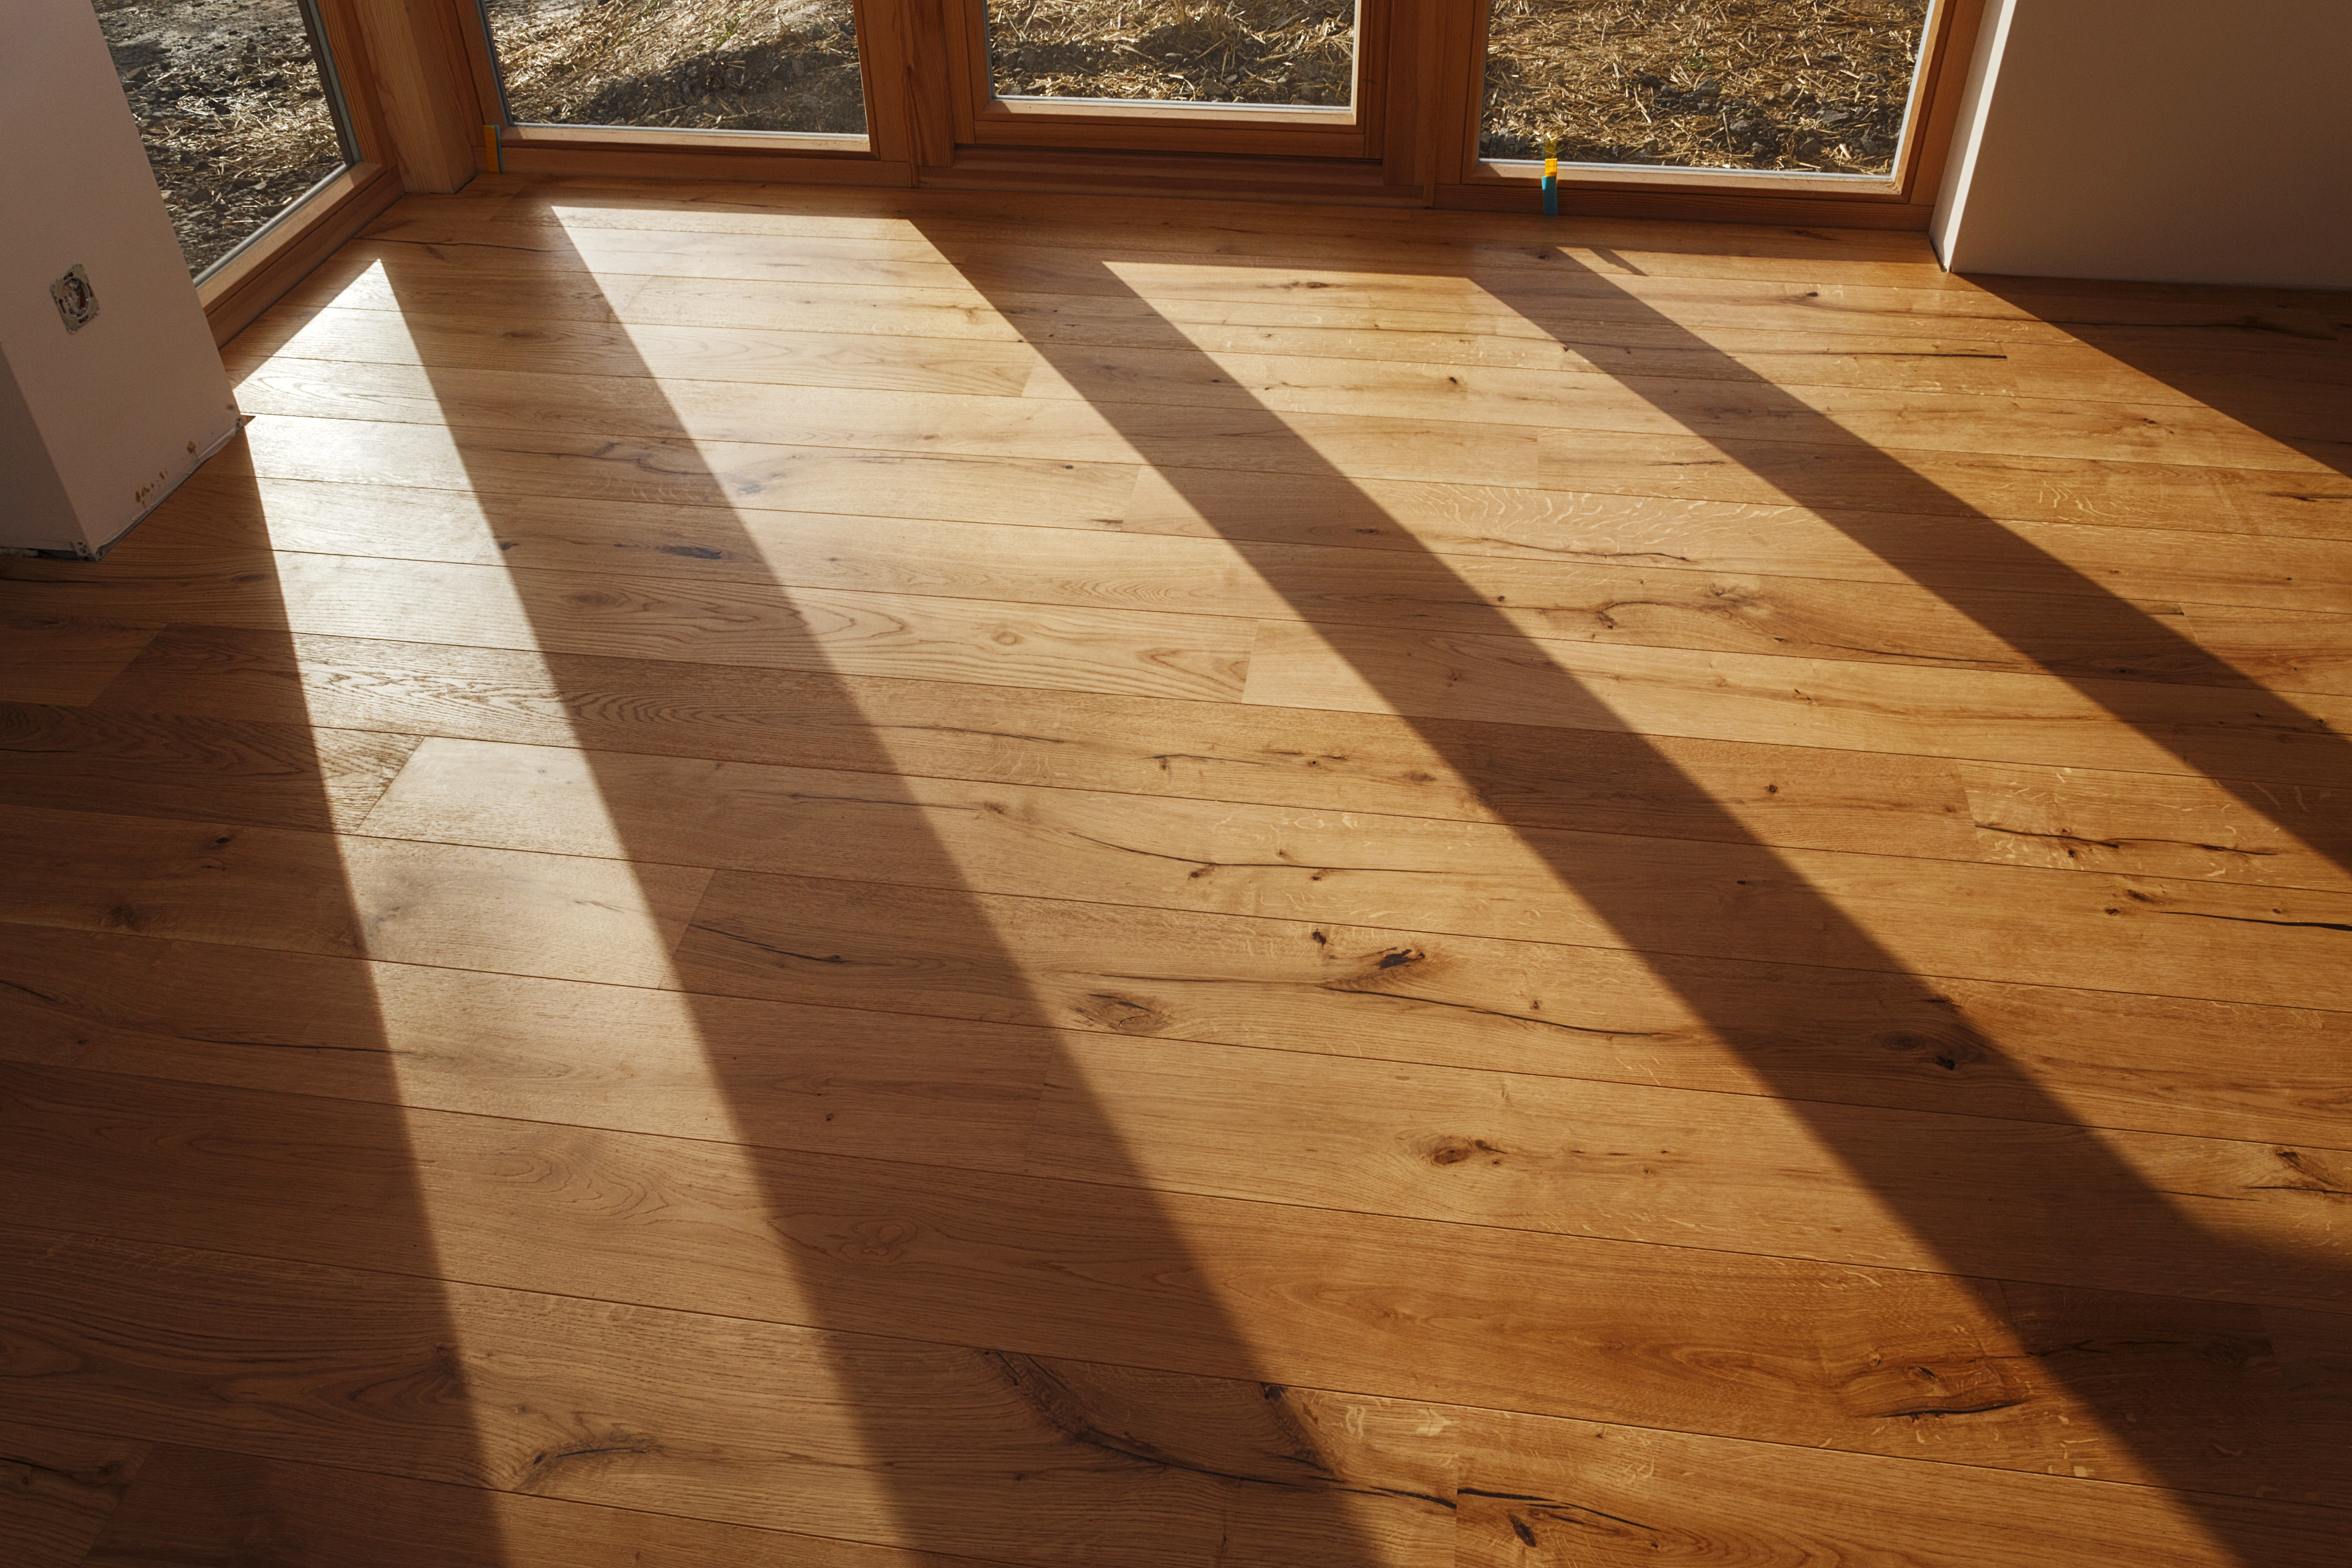 Wood Flooring Hardwood Versus, What Is The Best Laminate Flooring For Money